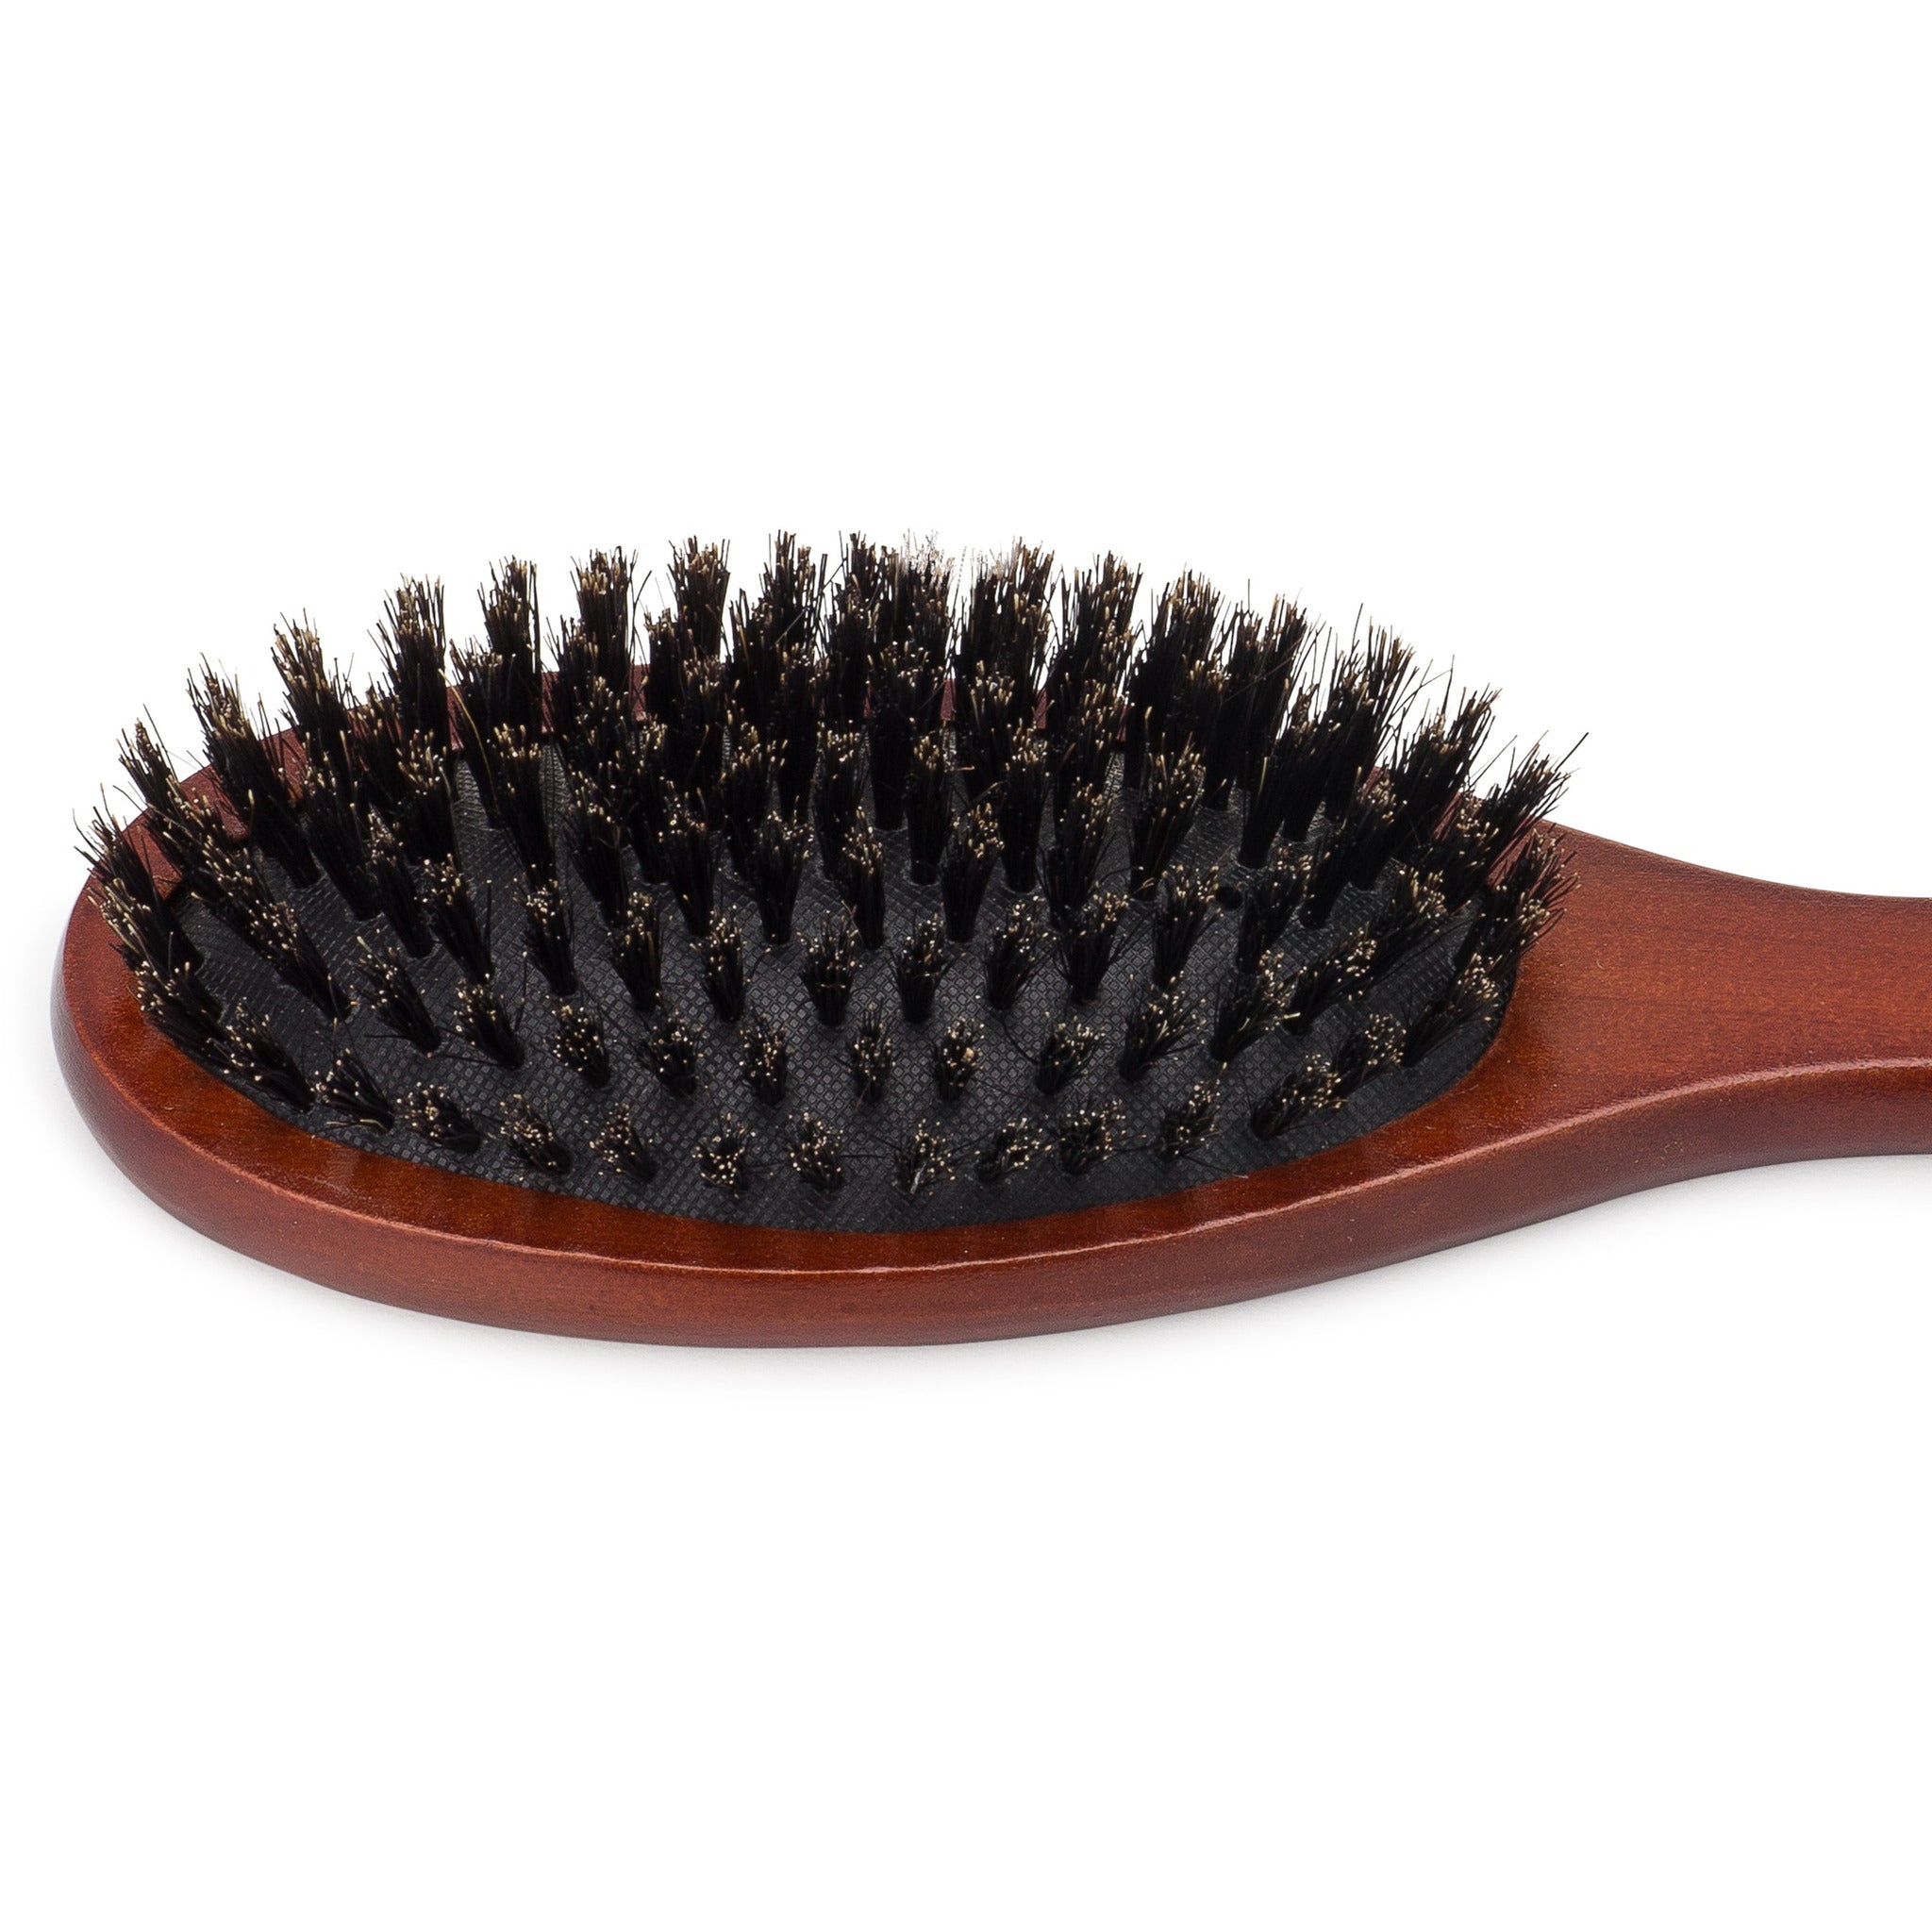 Grannaturals Boar Bristle Wooden Oval Hair Brush For Women And Men